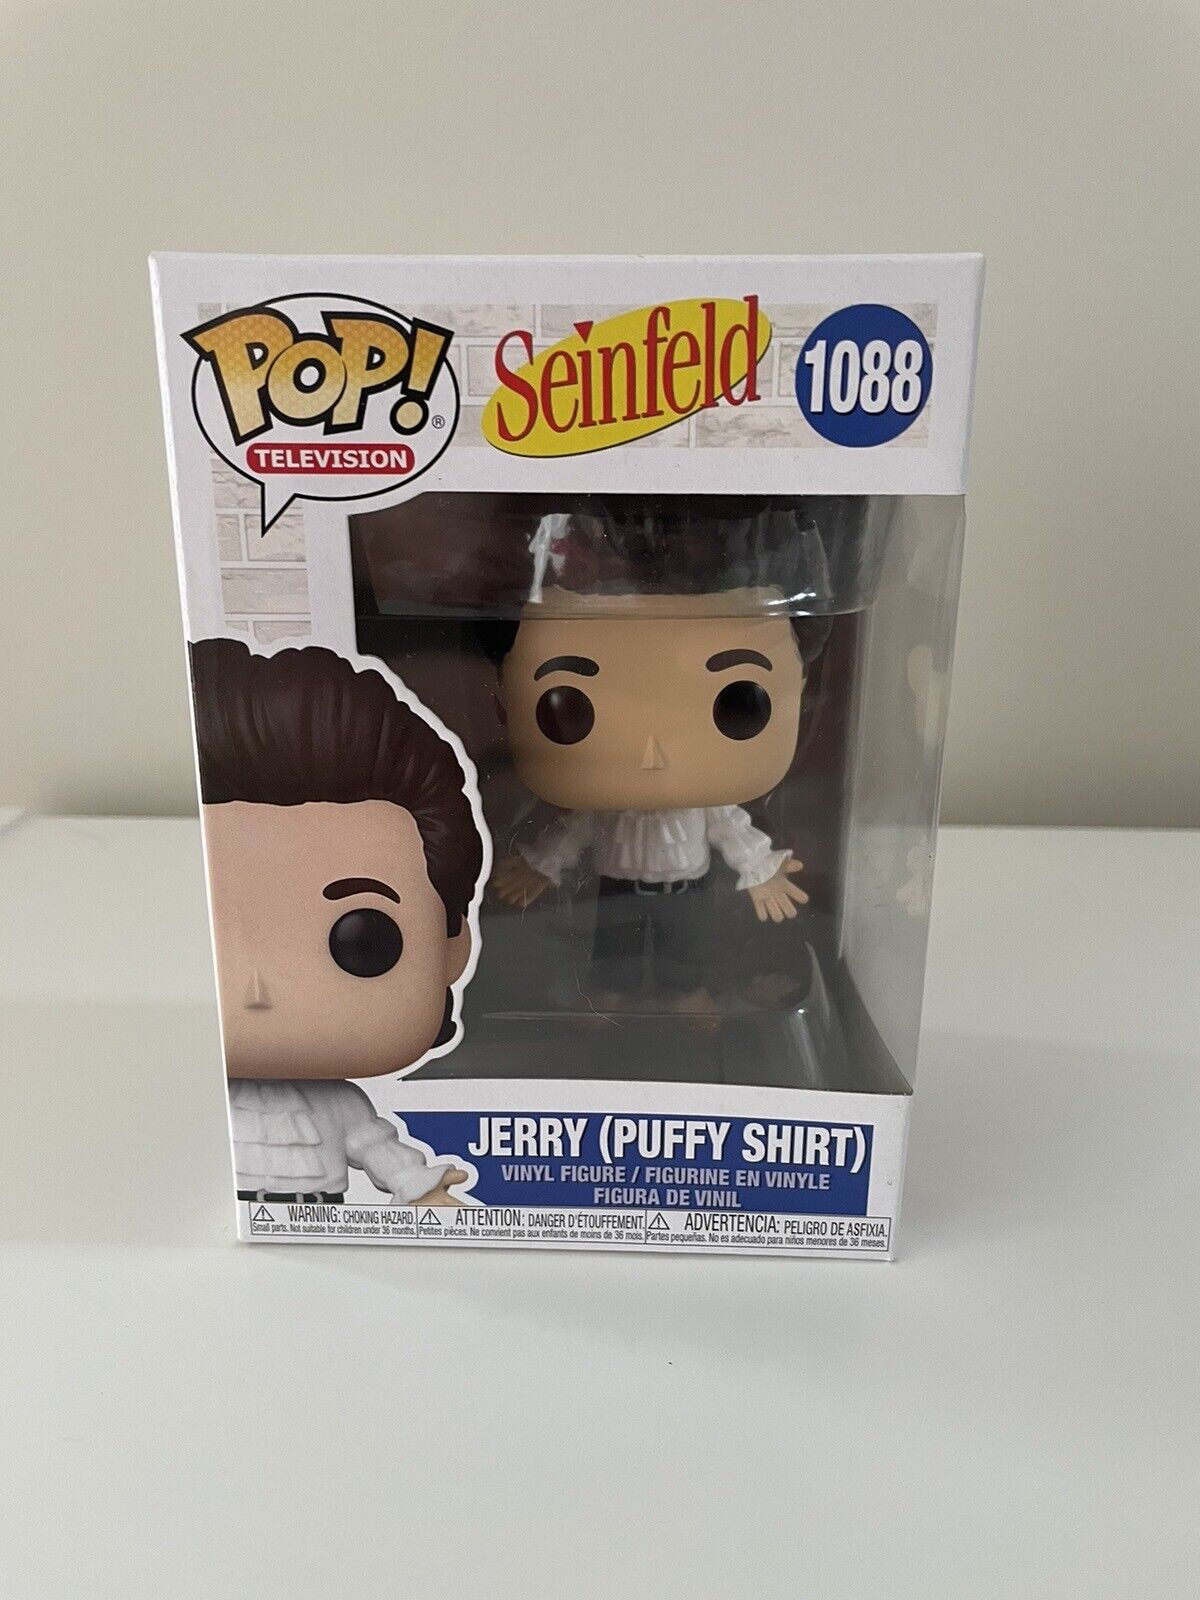 Funko Pop Jerry (Puffy Shirt) #1088 Seinfeld Character